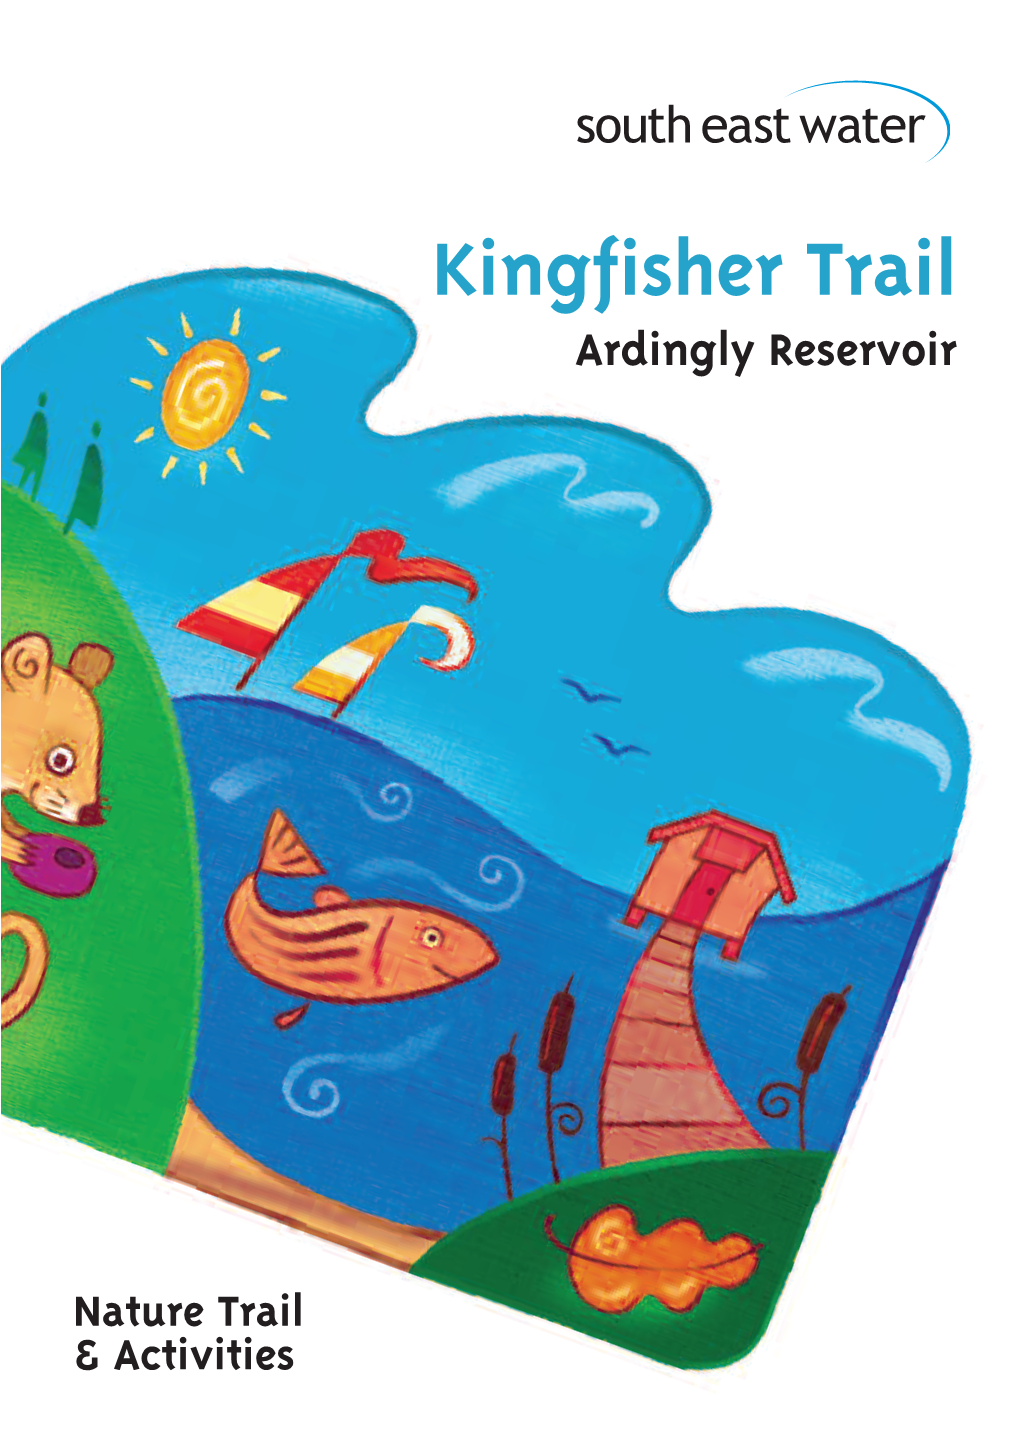 Kingfisher Trail Ardingly Reservoir